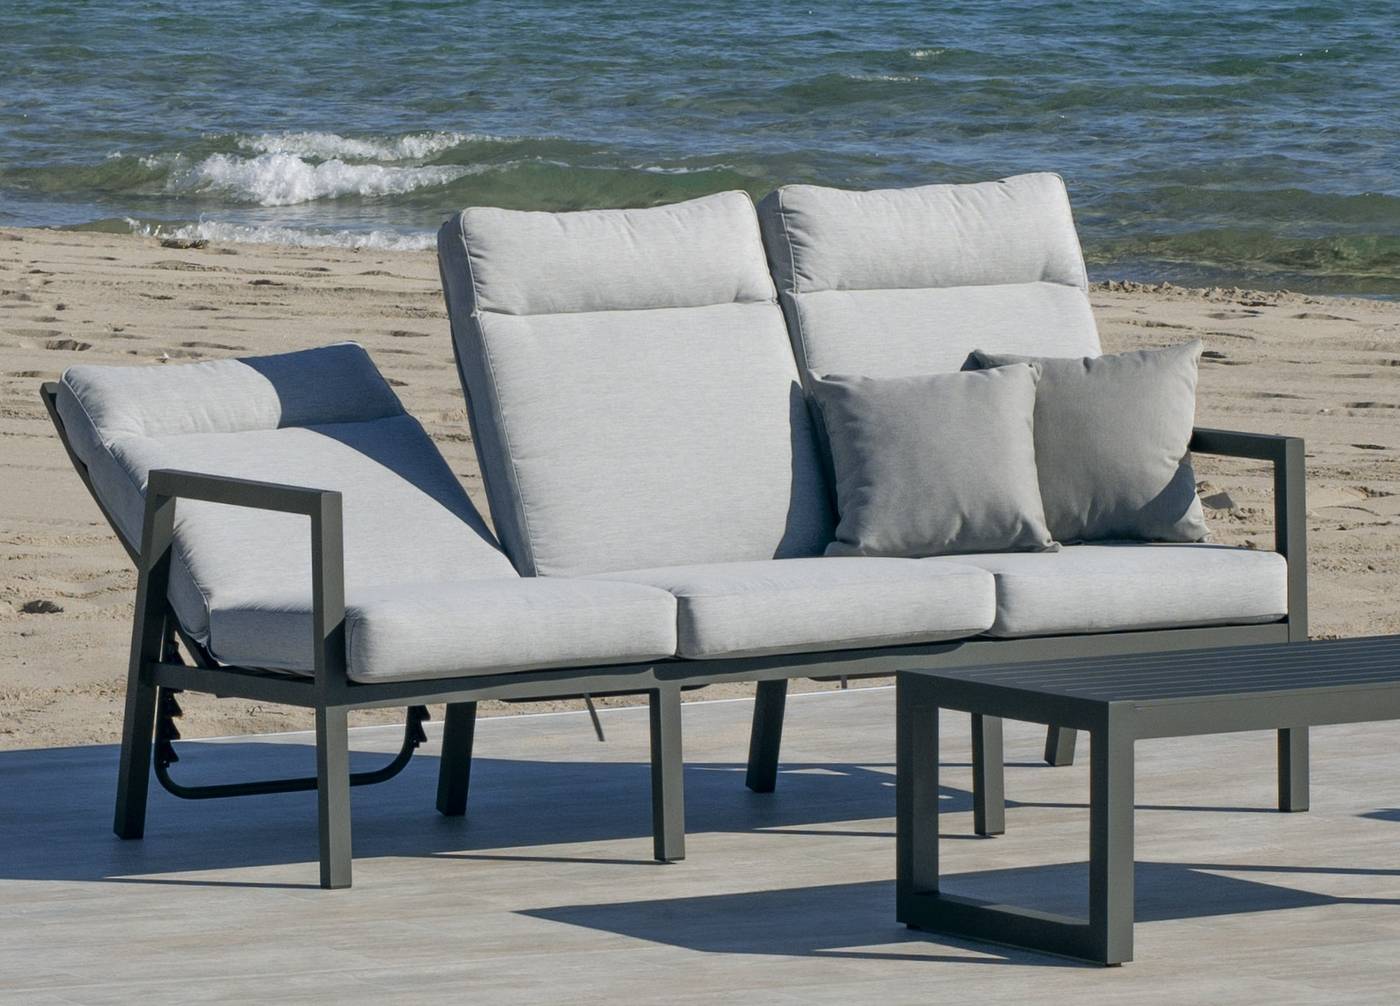 Set Aluminio Voriam-8 - Conjunto aluminio: sofá 3 plazas + 2 sillones + mesa de centro. Respaldos reclinables. Colores: blanco, antracita, champagne, plata o marrón.